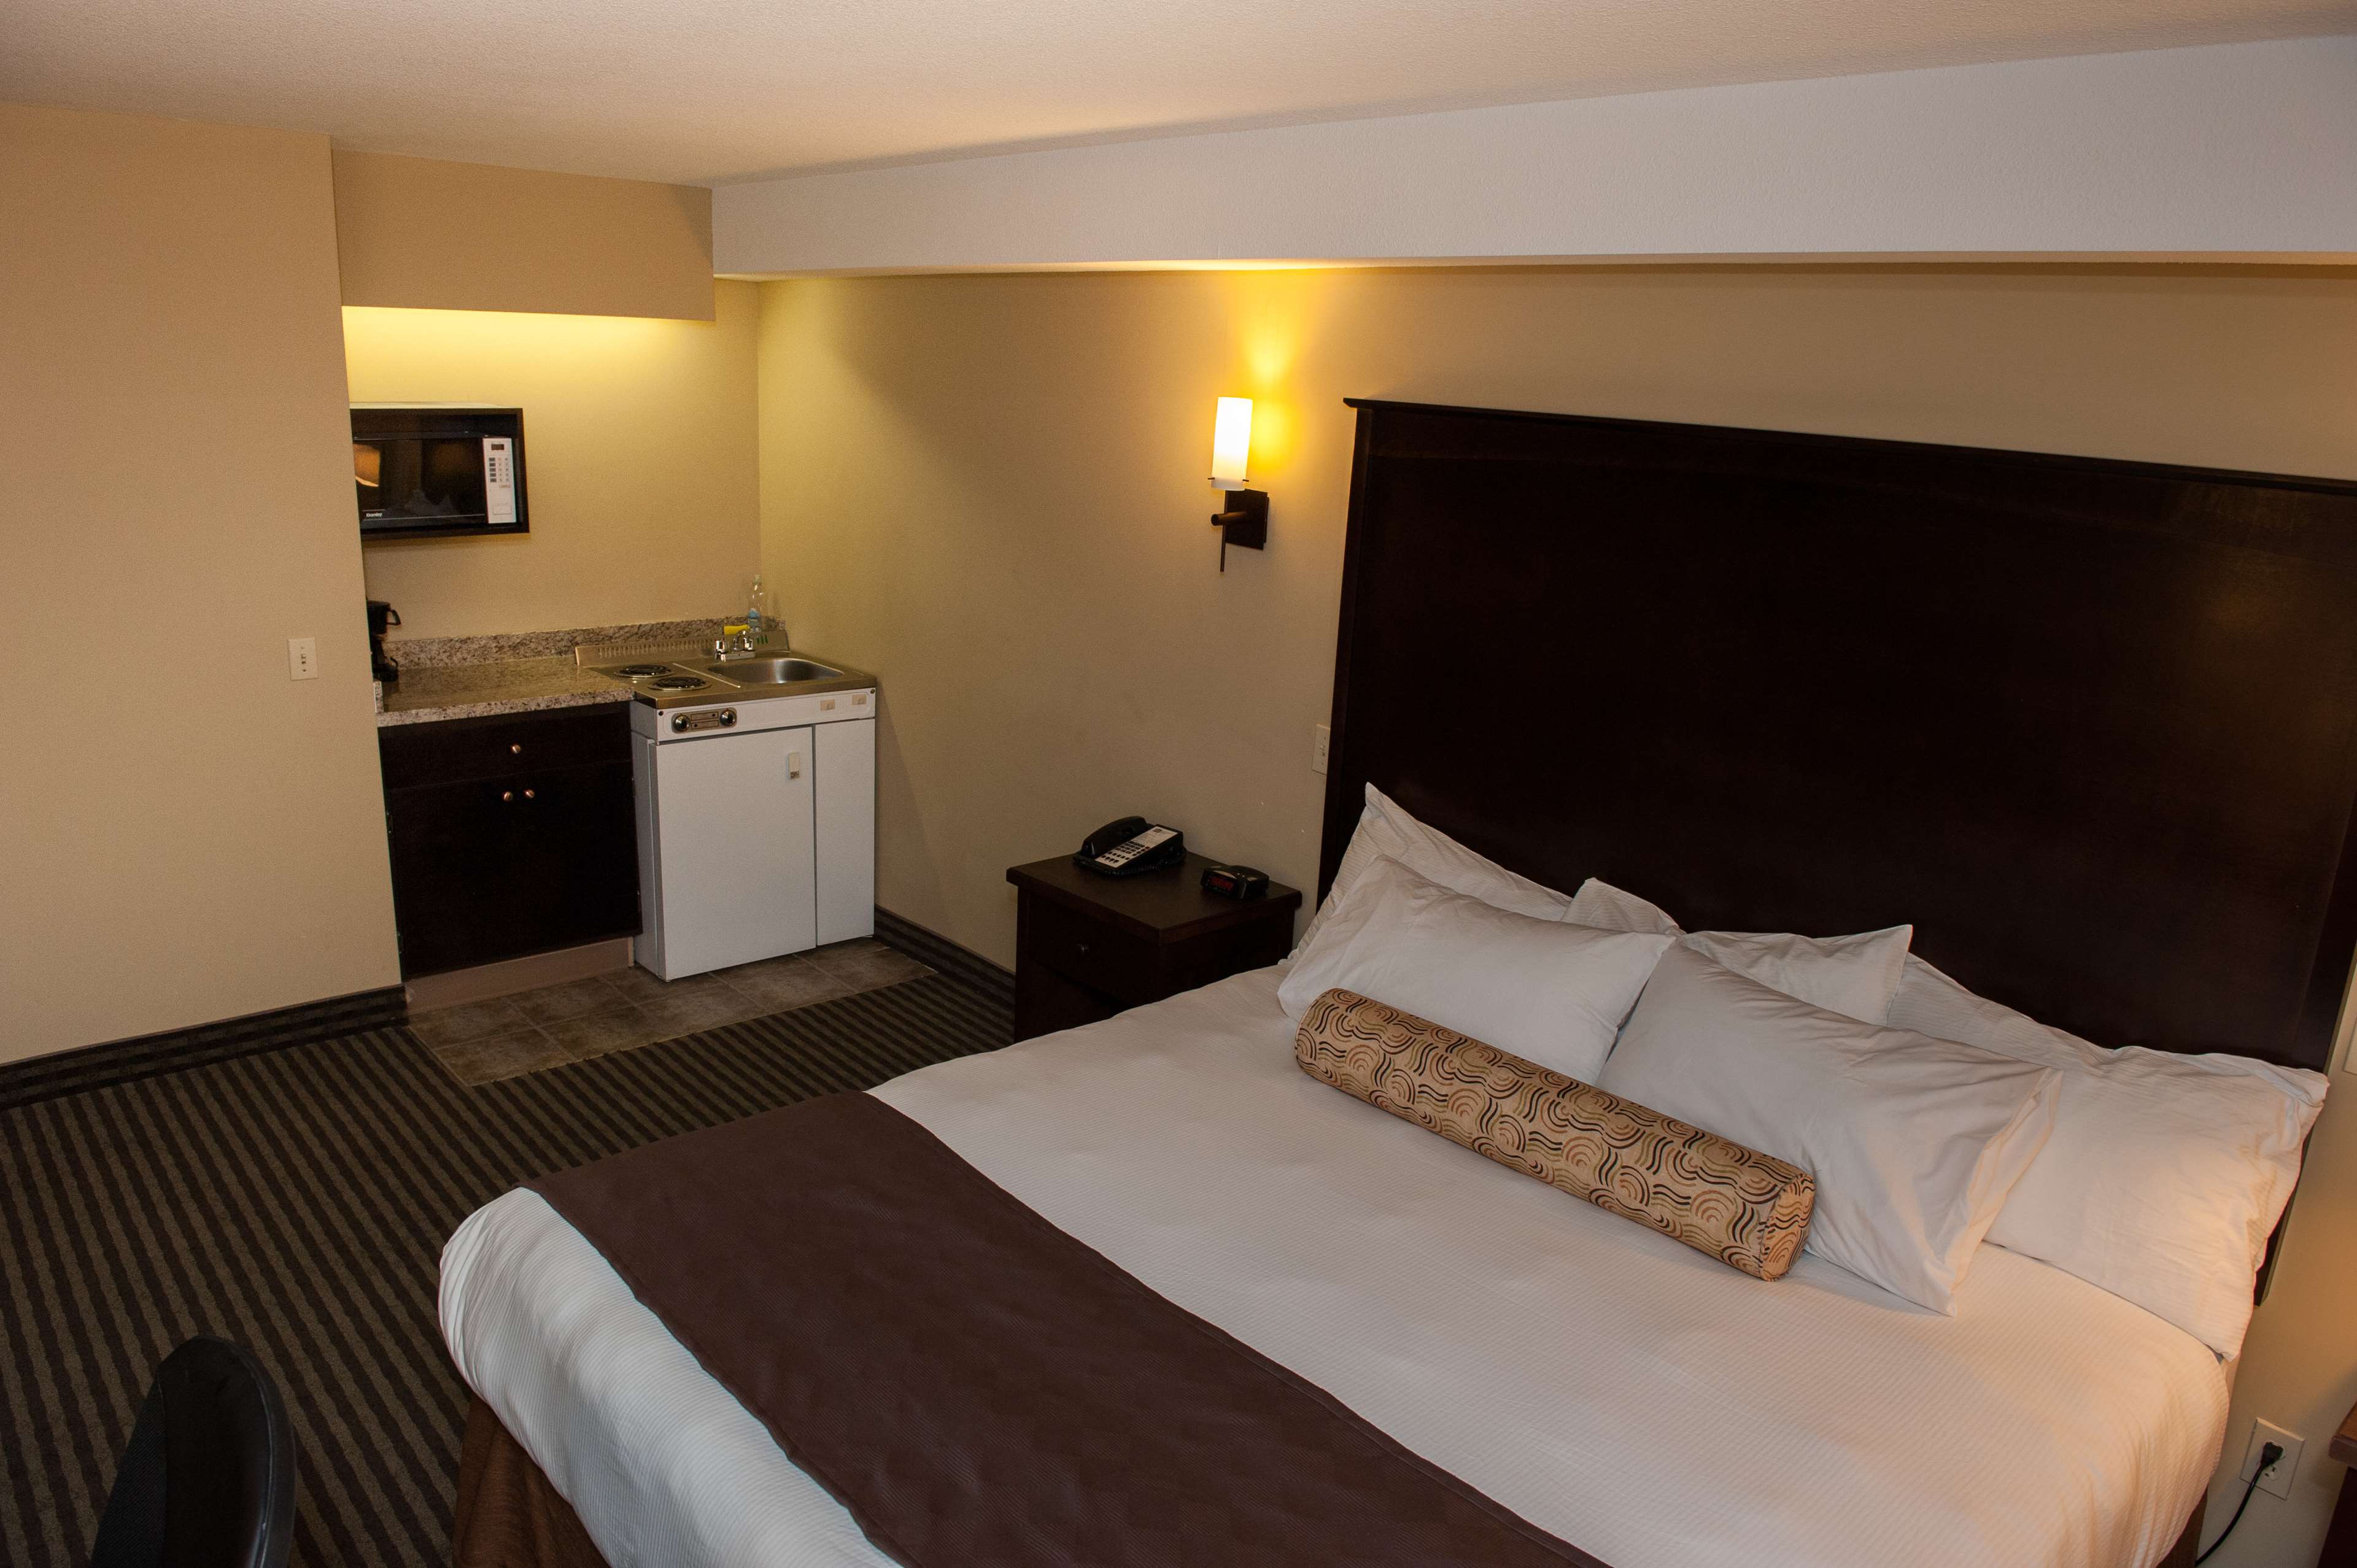 King Guest Room with Kitchen Best Western Maple Ridge Hotel Maple Ridge (604)467-1511